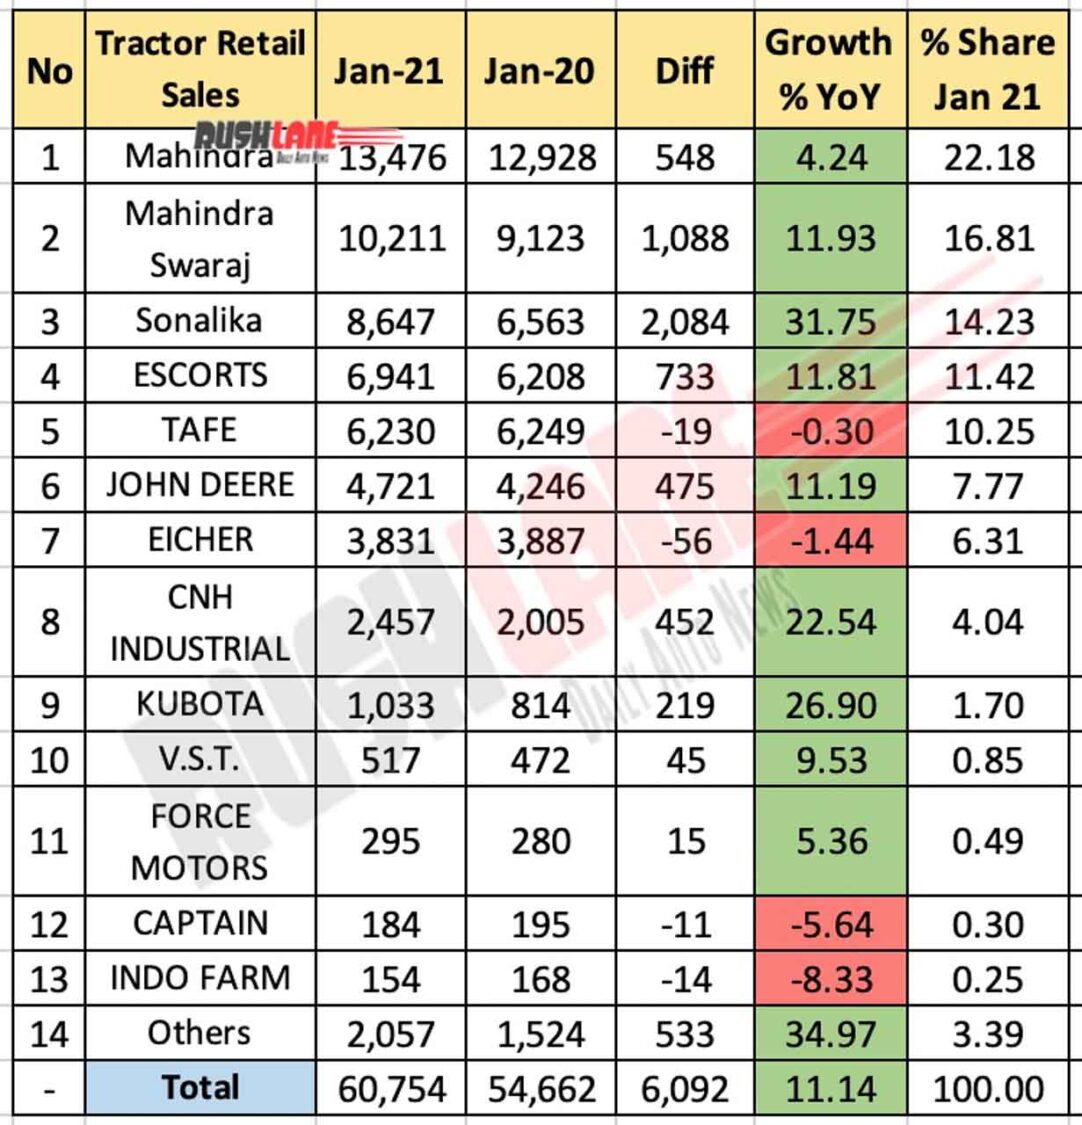 Tractor Retail Sales Jan 2021 vs Jan 2020 (YoY)